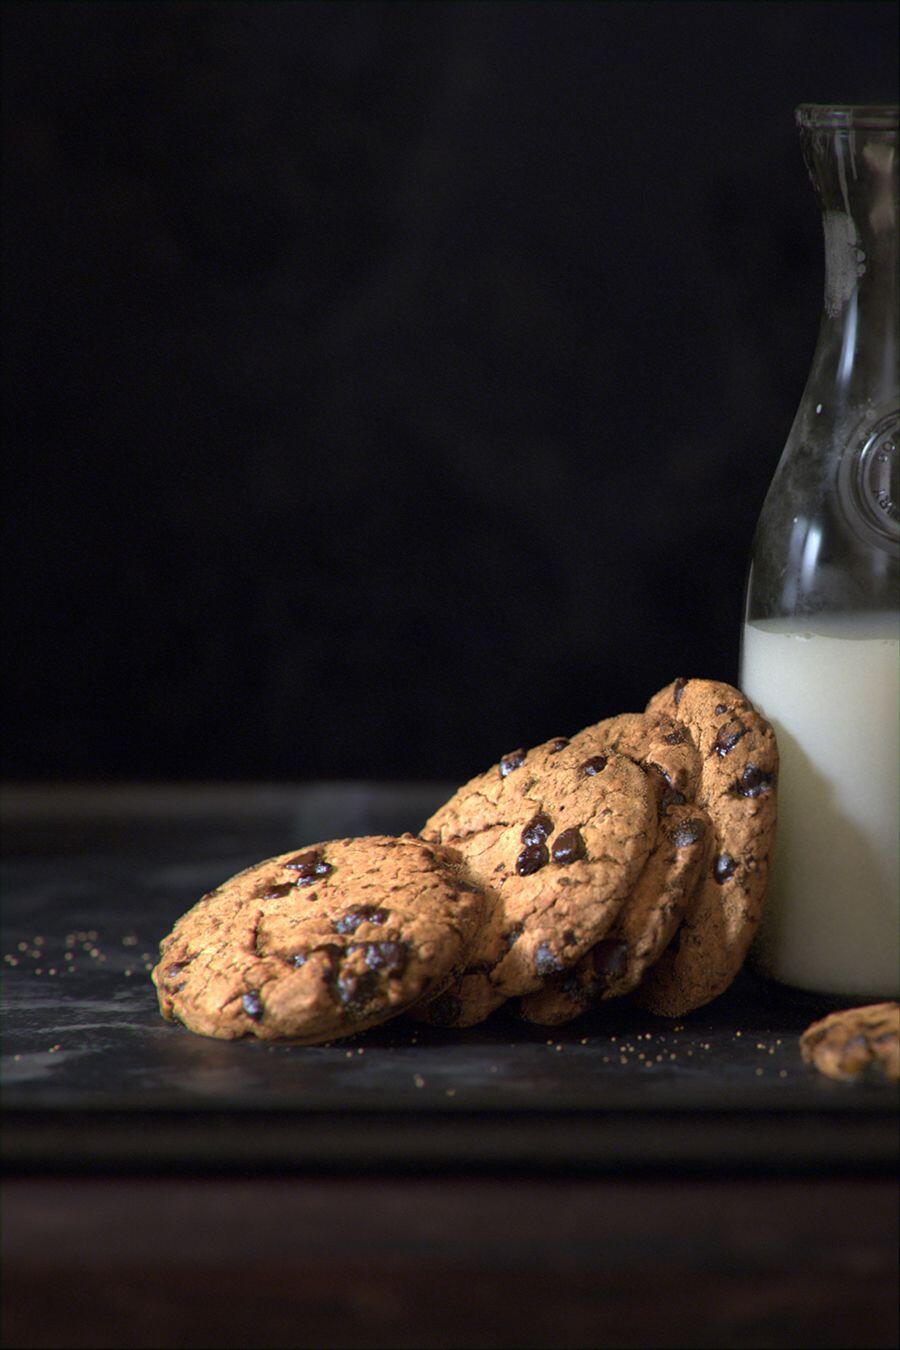 Pixar milk and cookies